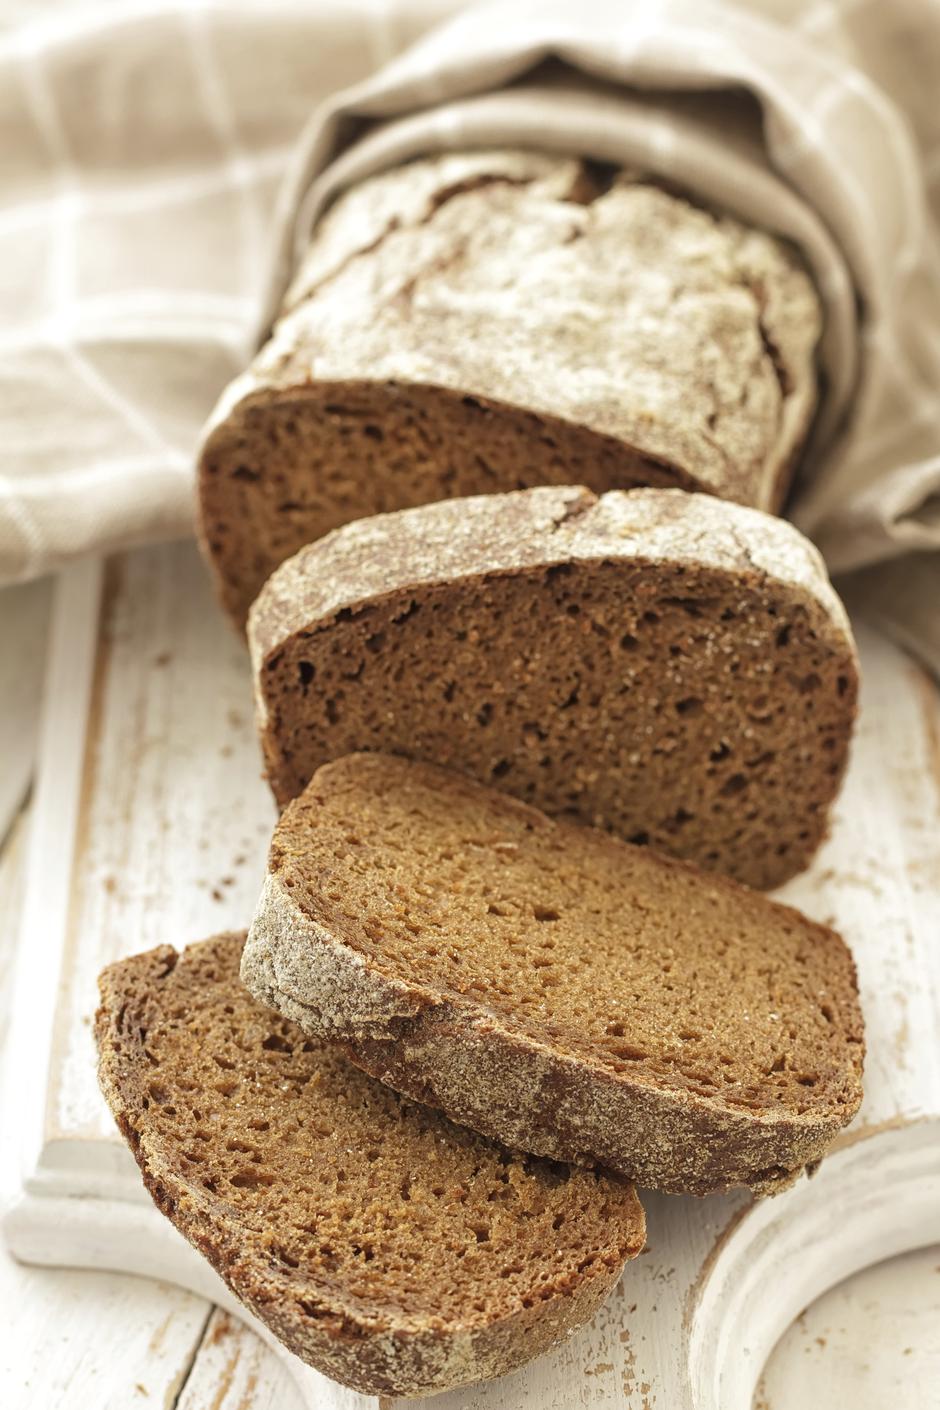 kruh s četiri vrste brašna | Author: Thinkstock